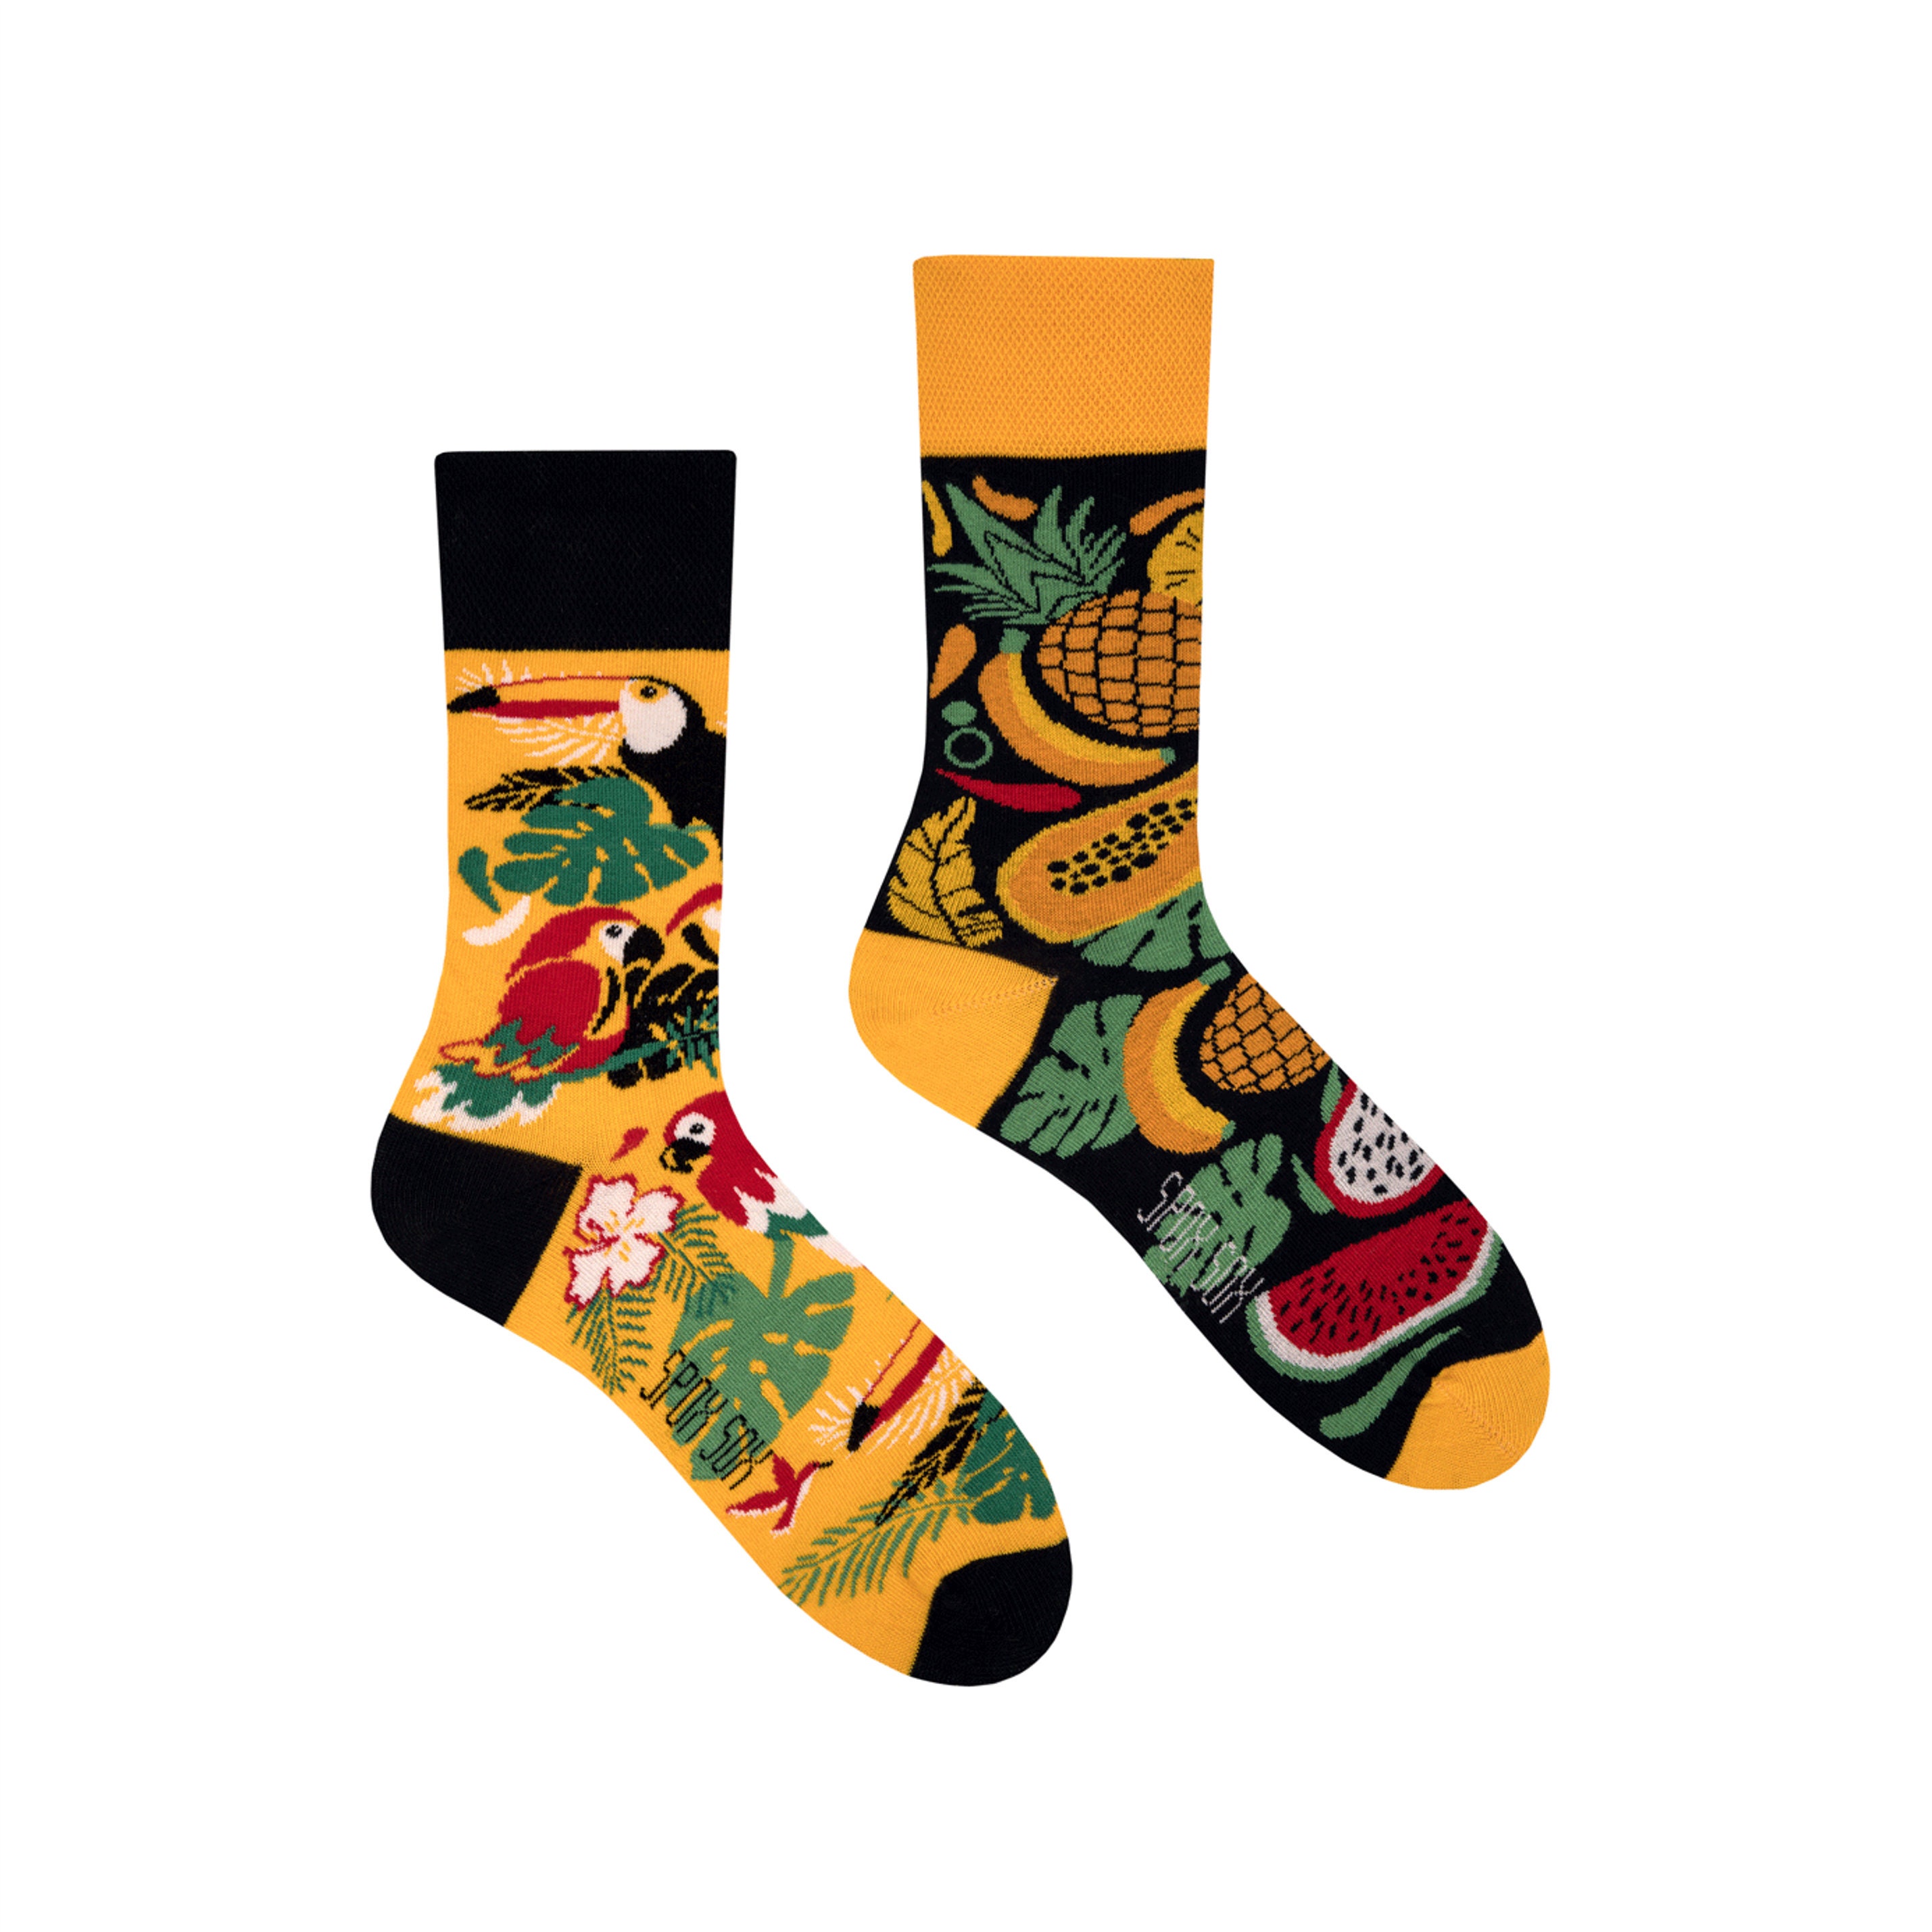 Puakenikeni Aloha from Hawaii Socks for Sale by hdwrittenaloha